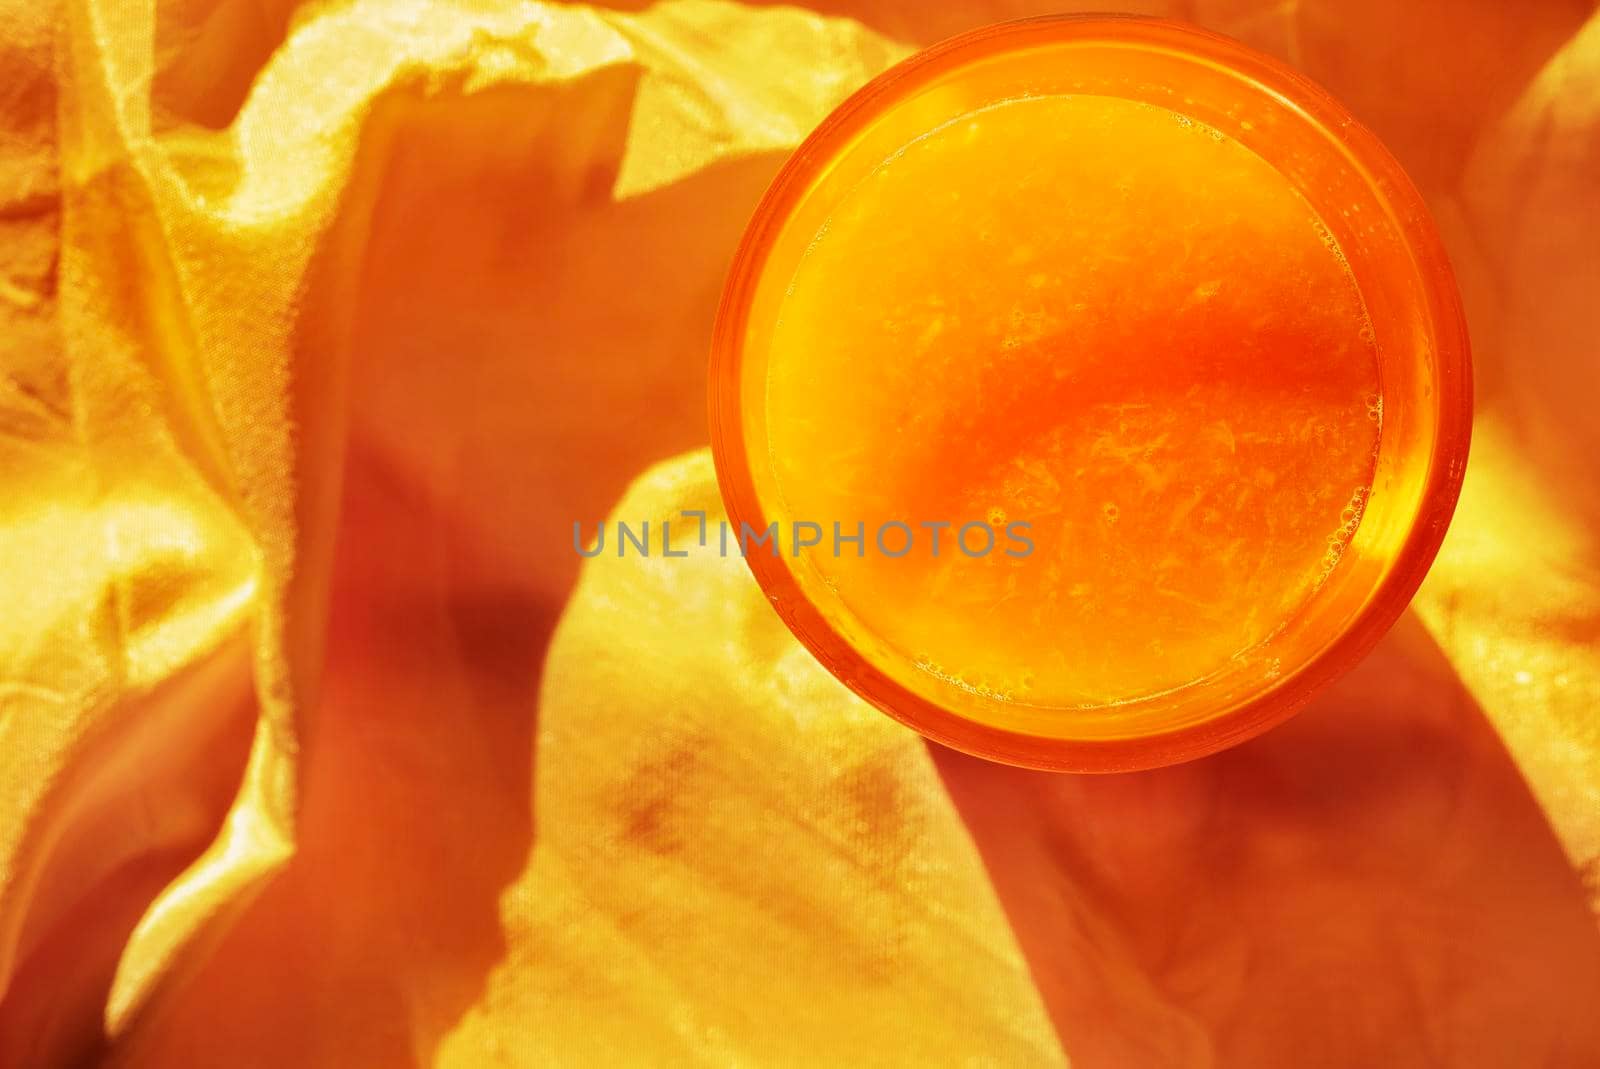  Glass with orange juice  on orange background by victimewalker